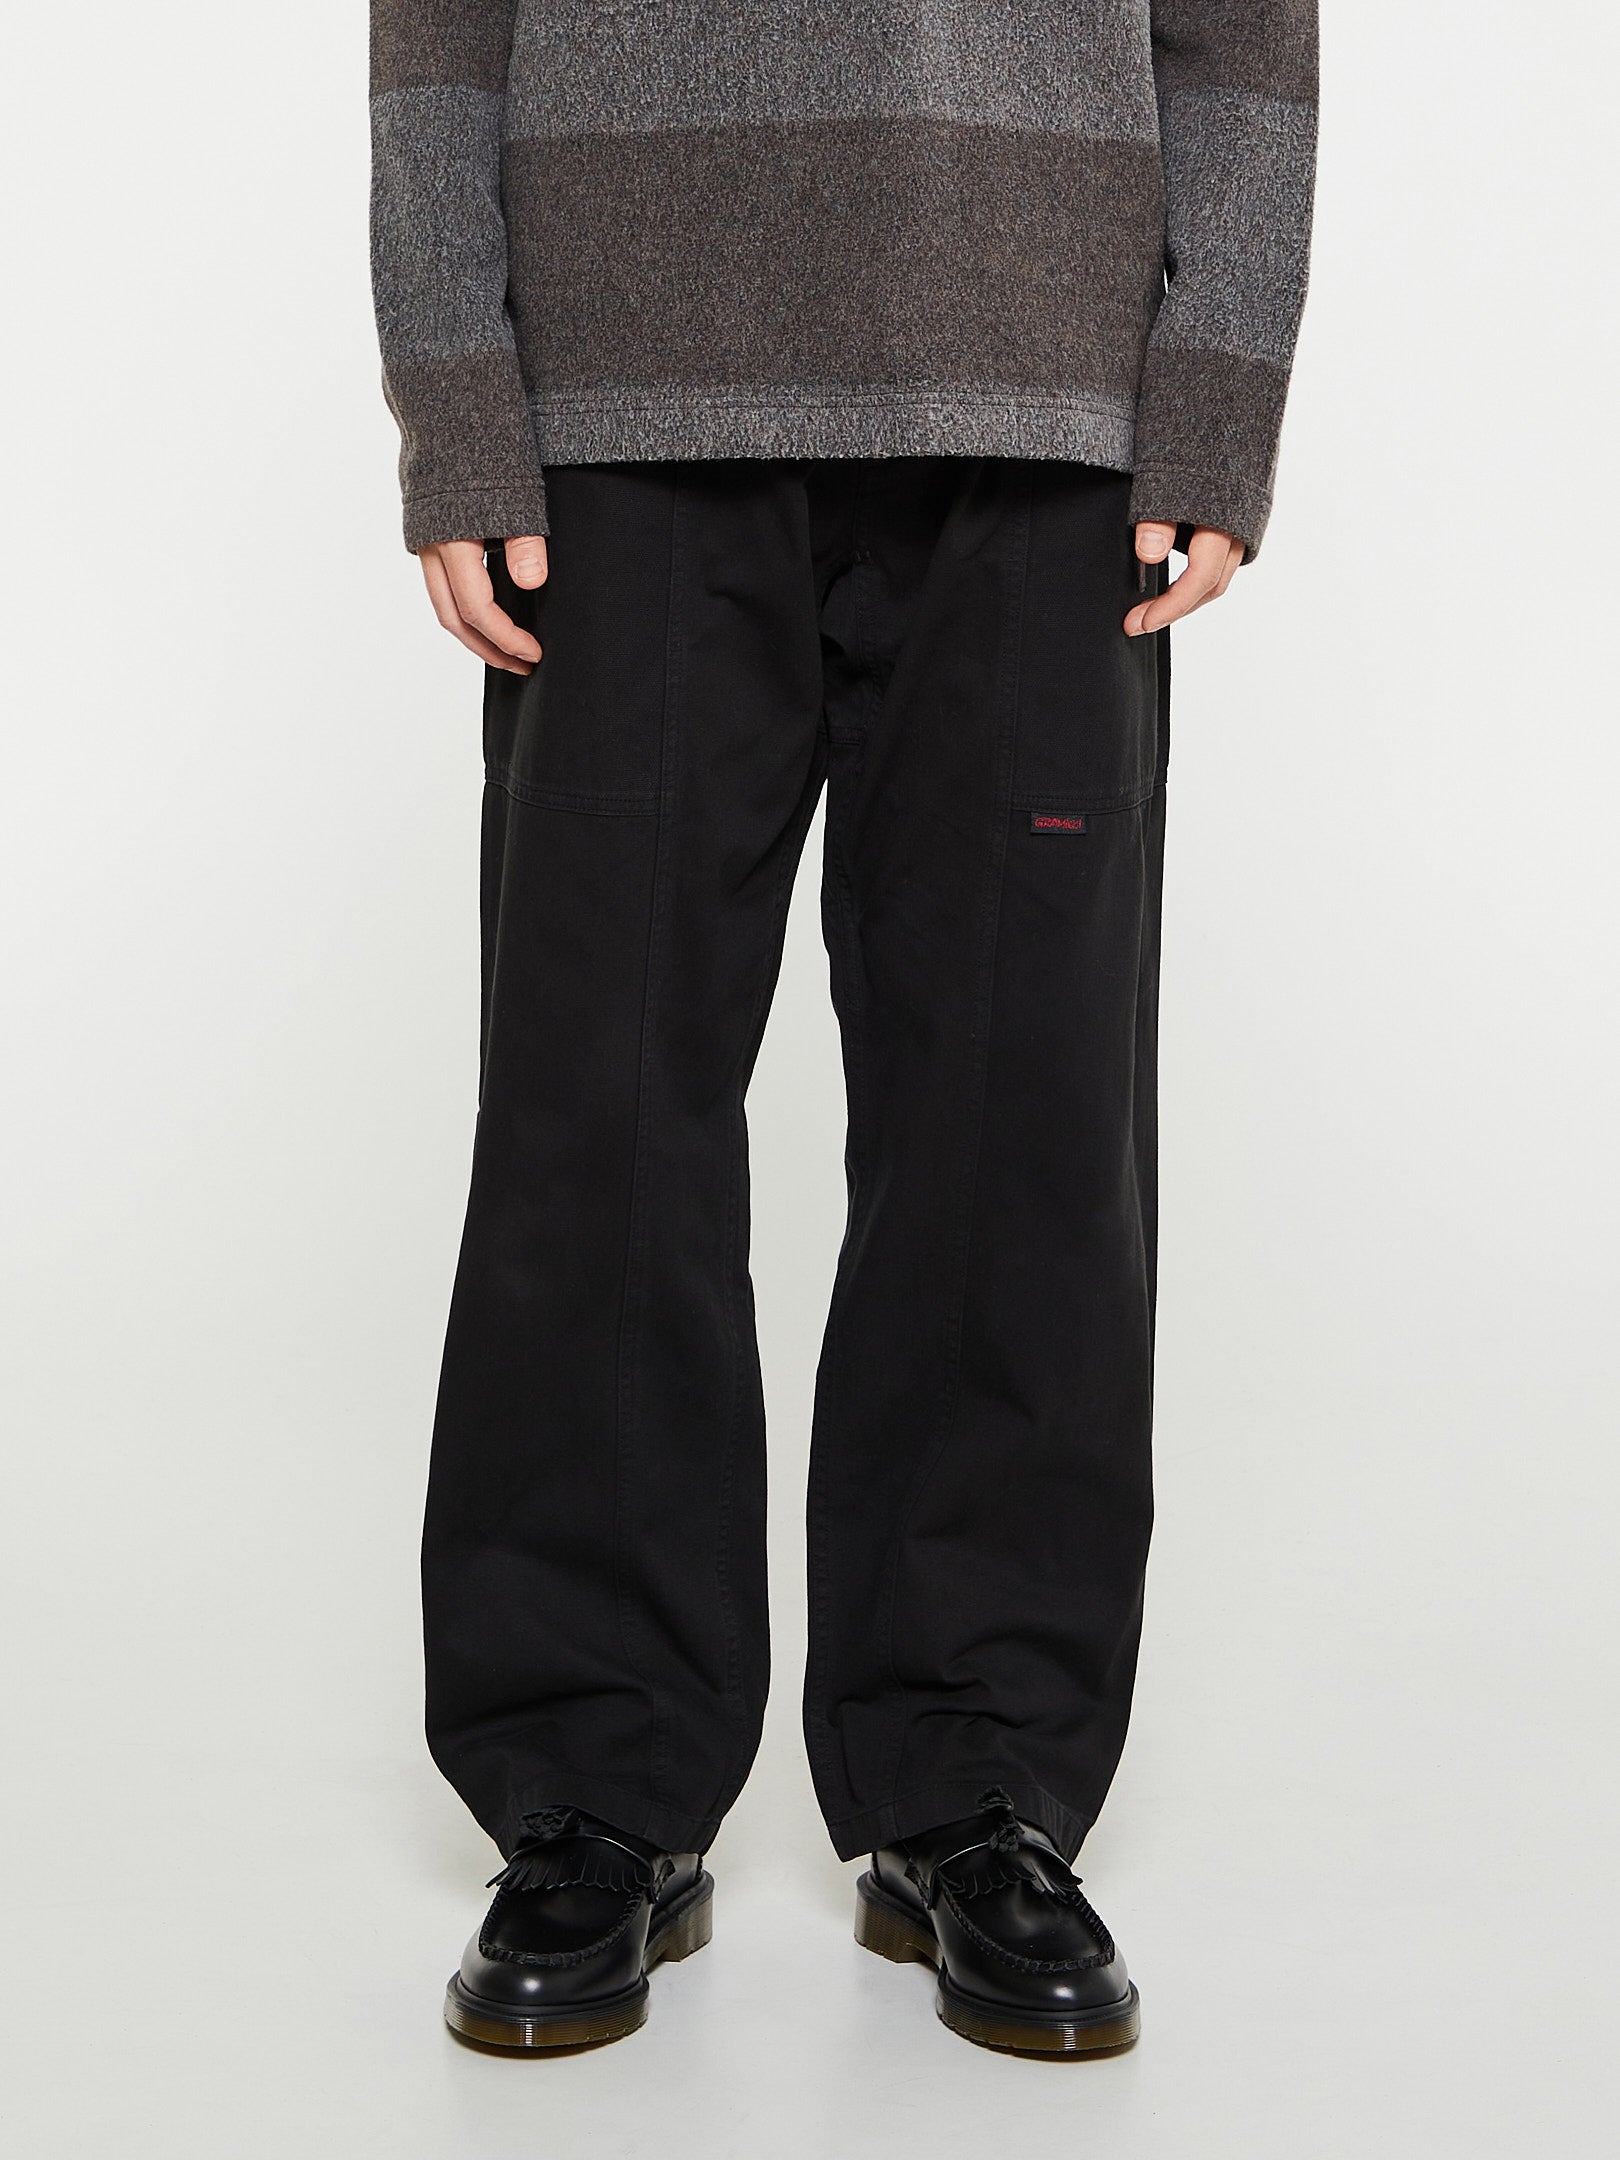 Eddie Bauer Women's Polar Fleece-Lined Pull-On Pants, Black 12